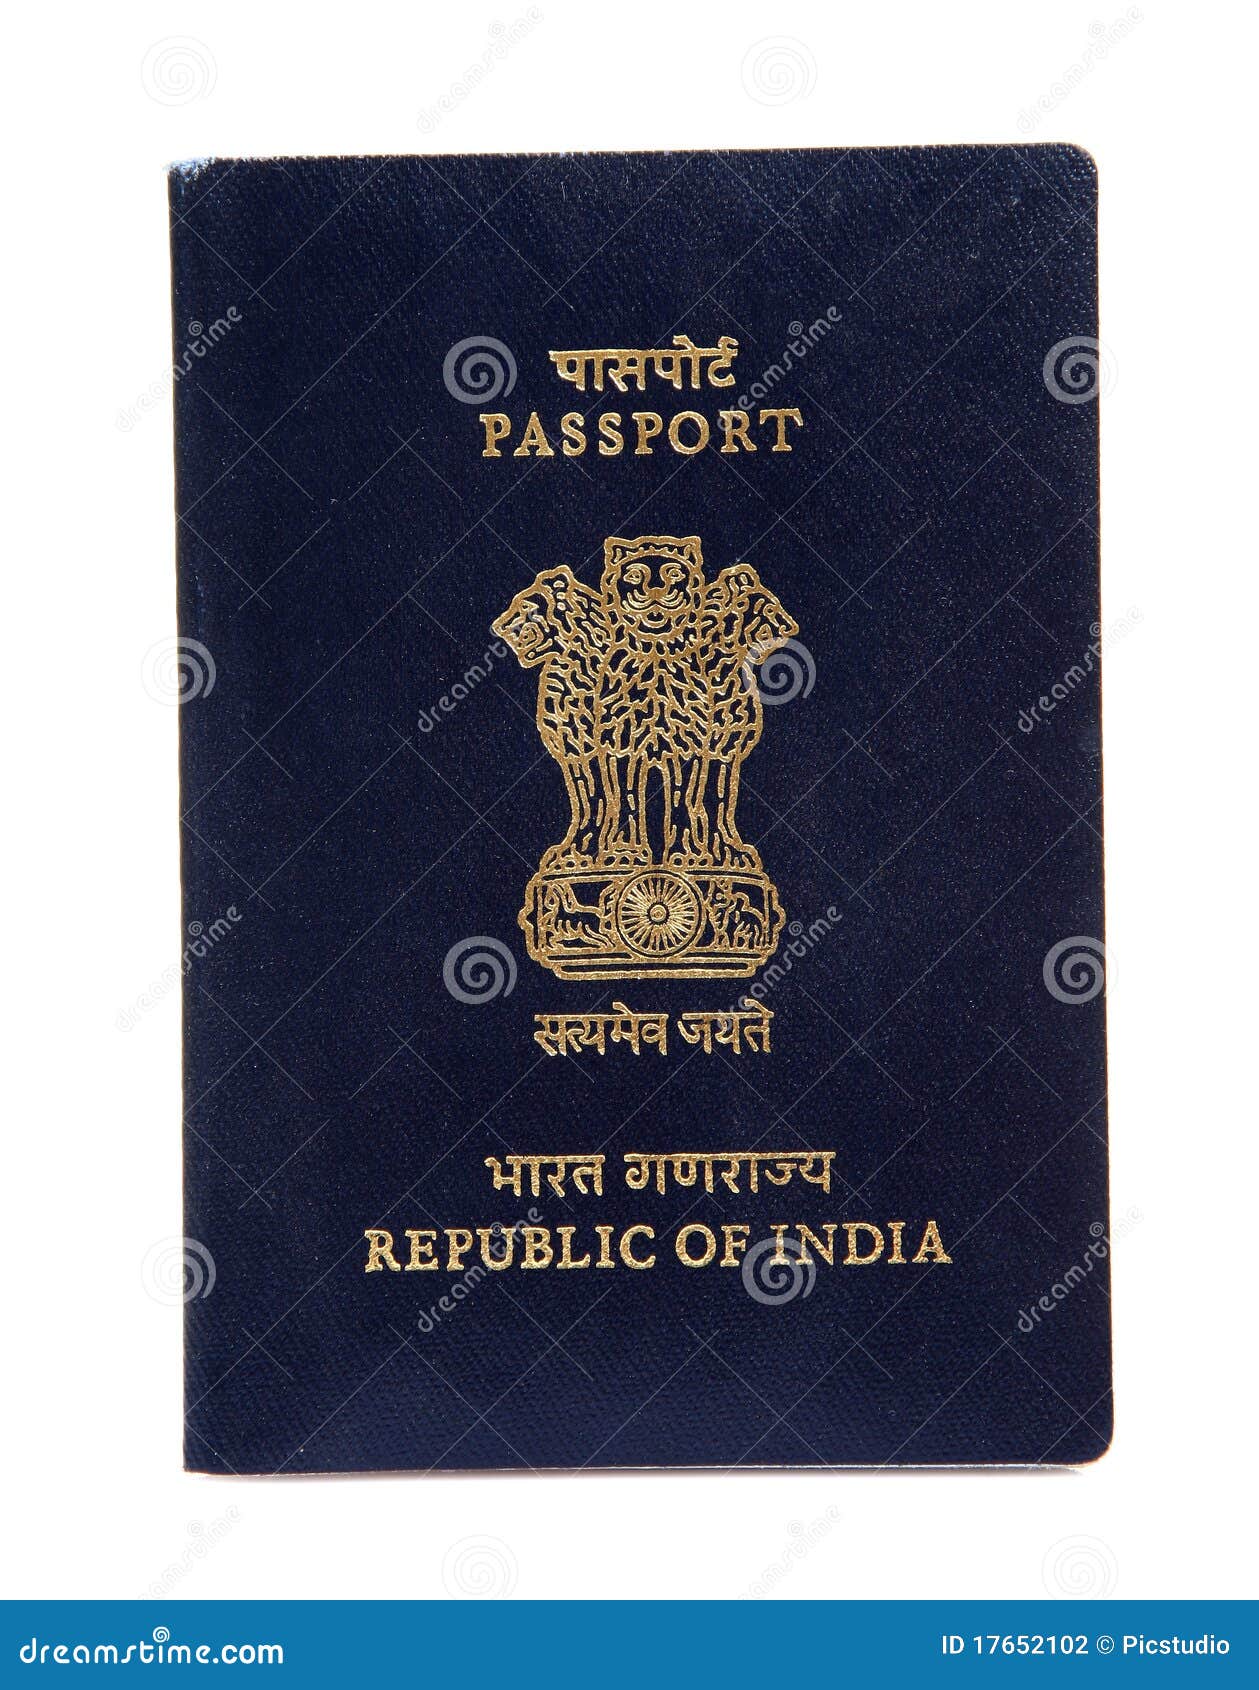 us travel docs passport india